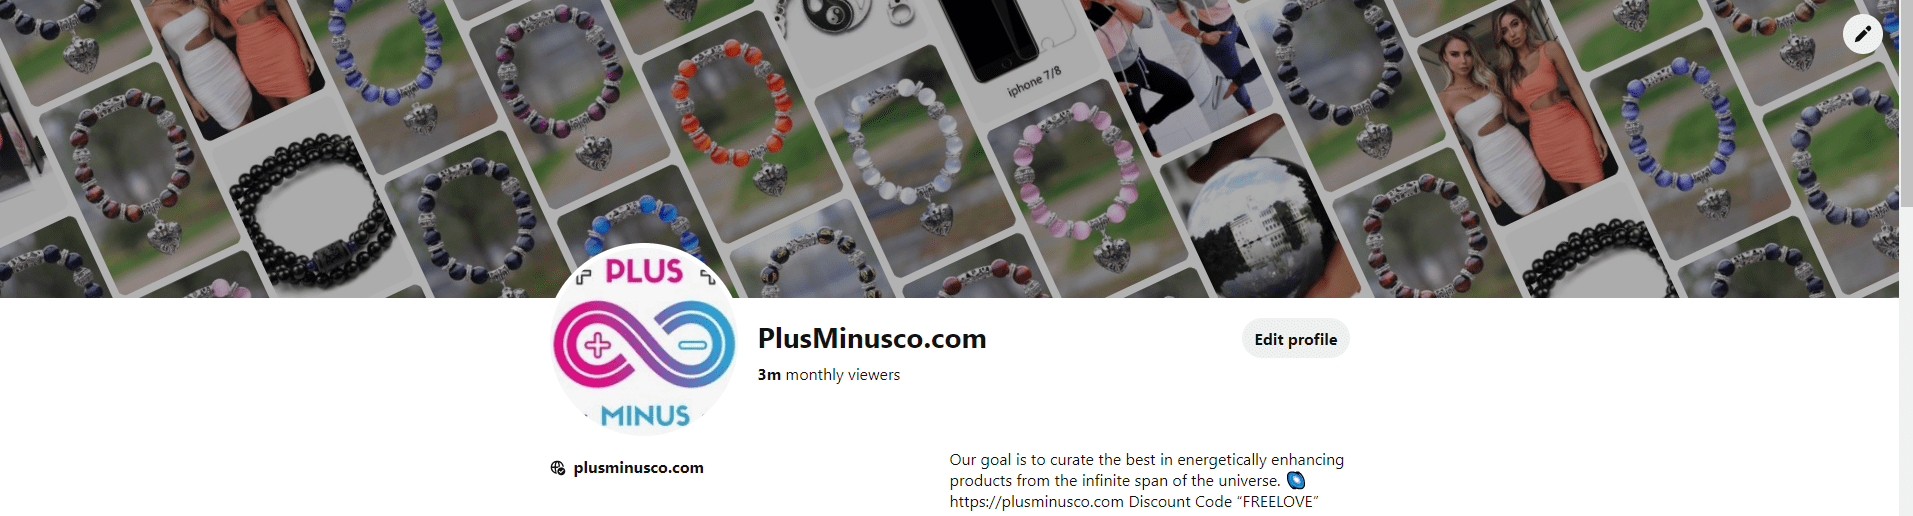 Armbänder - plusminusco.com